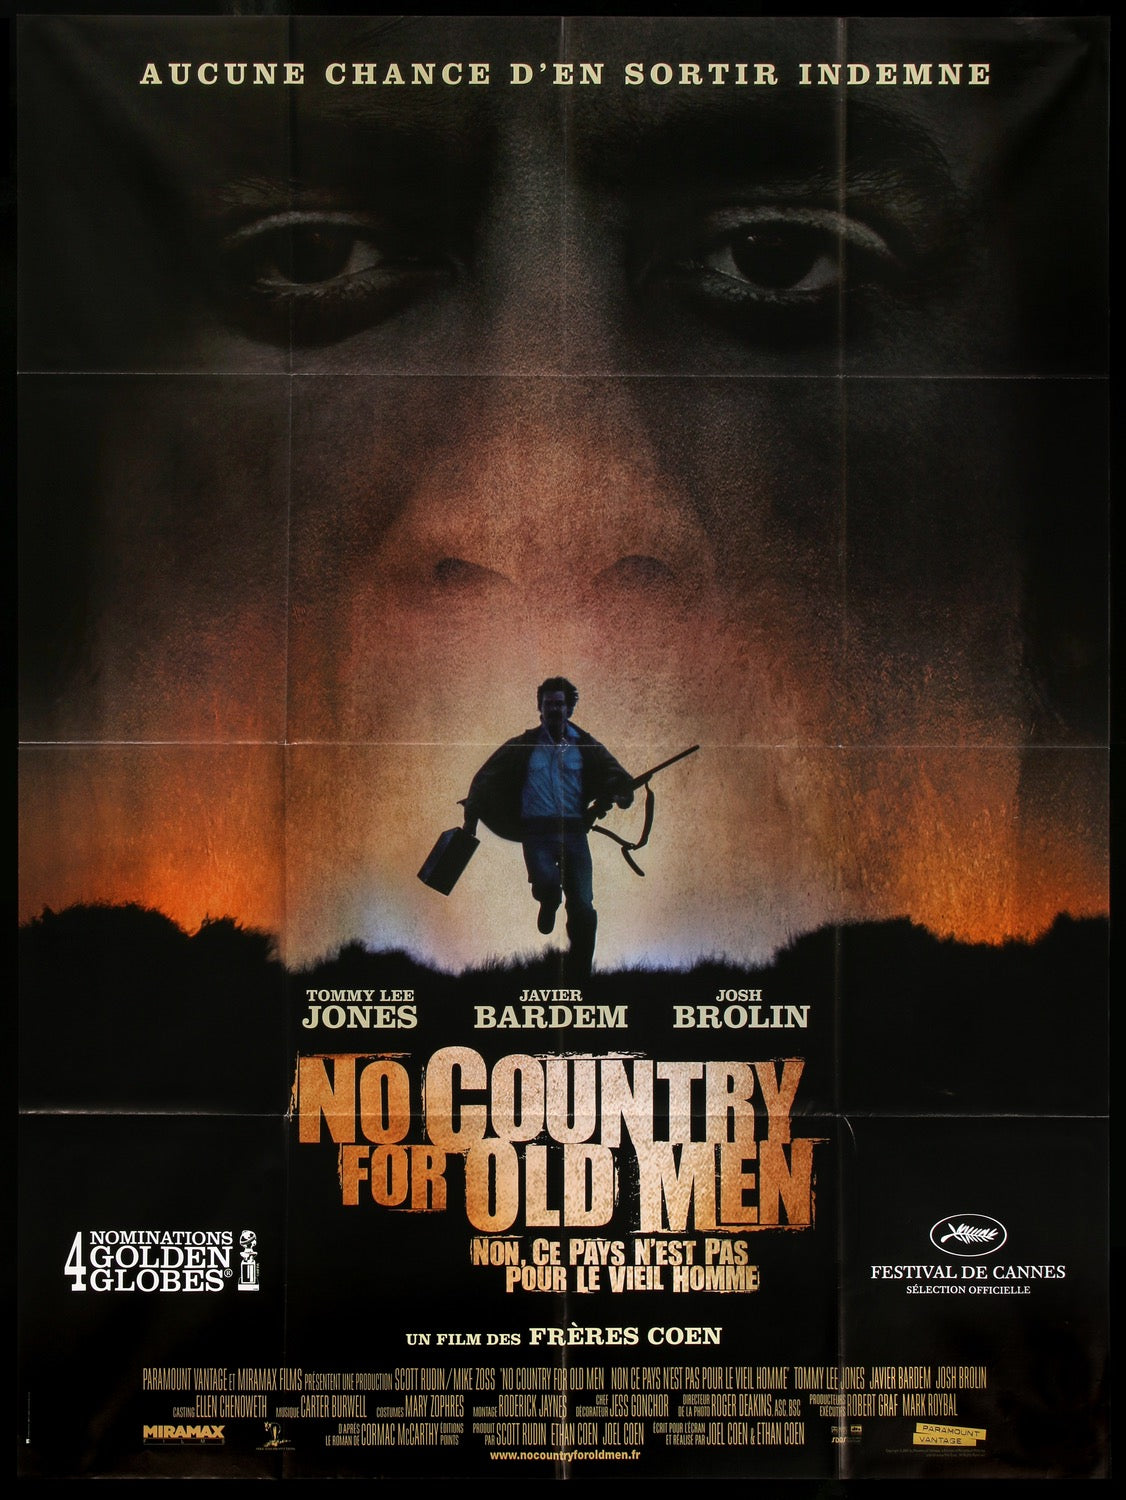 No Country For Old Men (2007) original movie poster for sale at Original Film Art